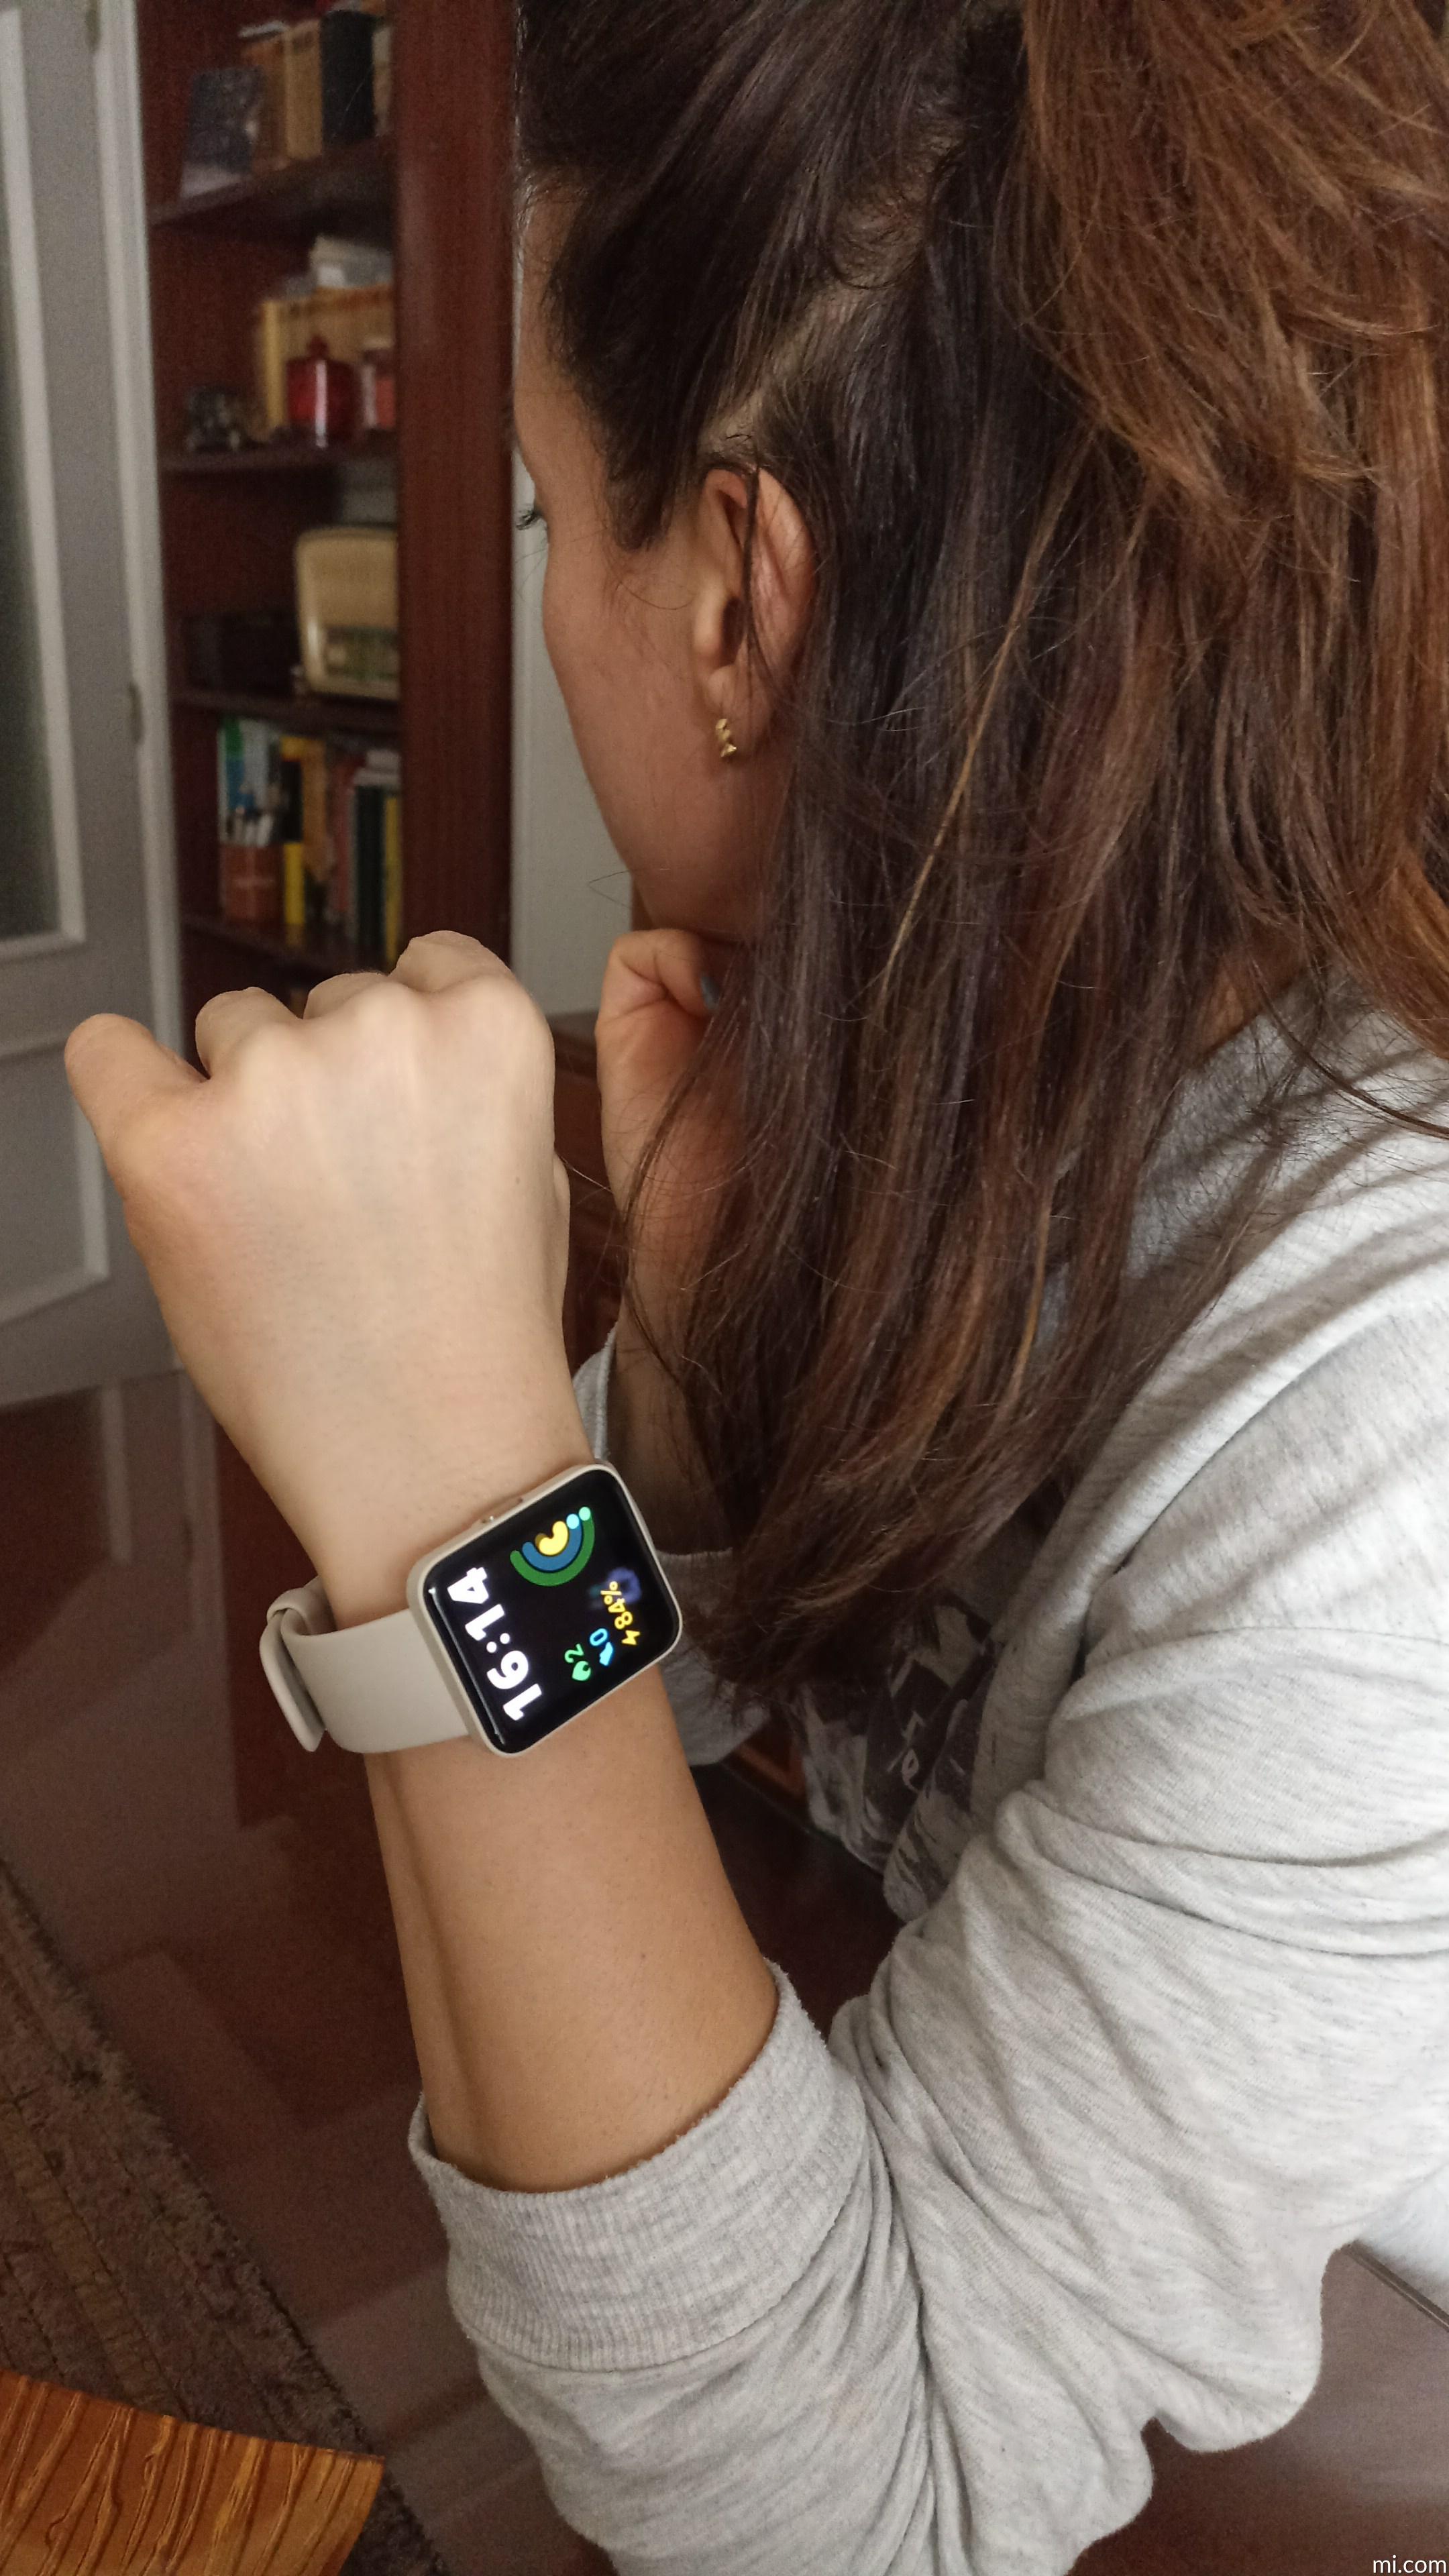 Reloj Smart Xiaomi Redmi Watch 2 Lite Gps Oximetro Cardio